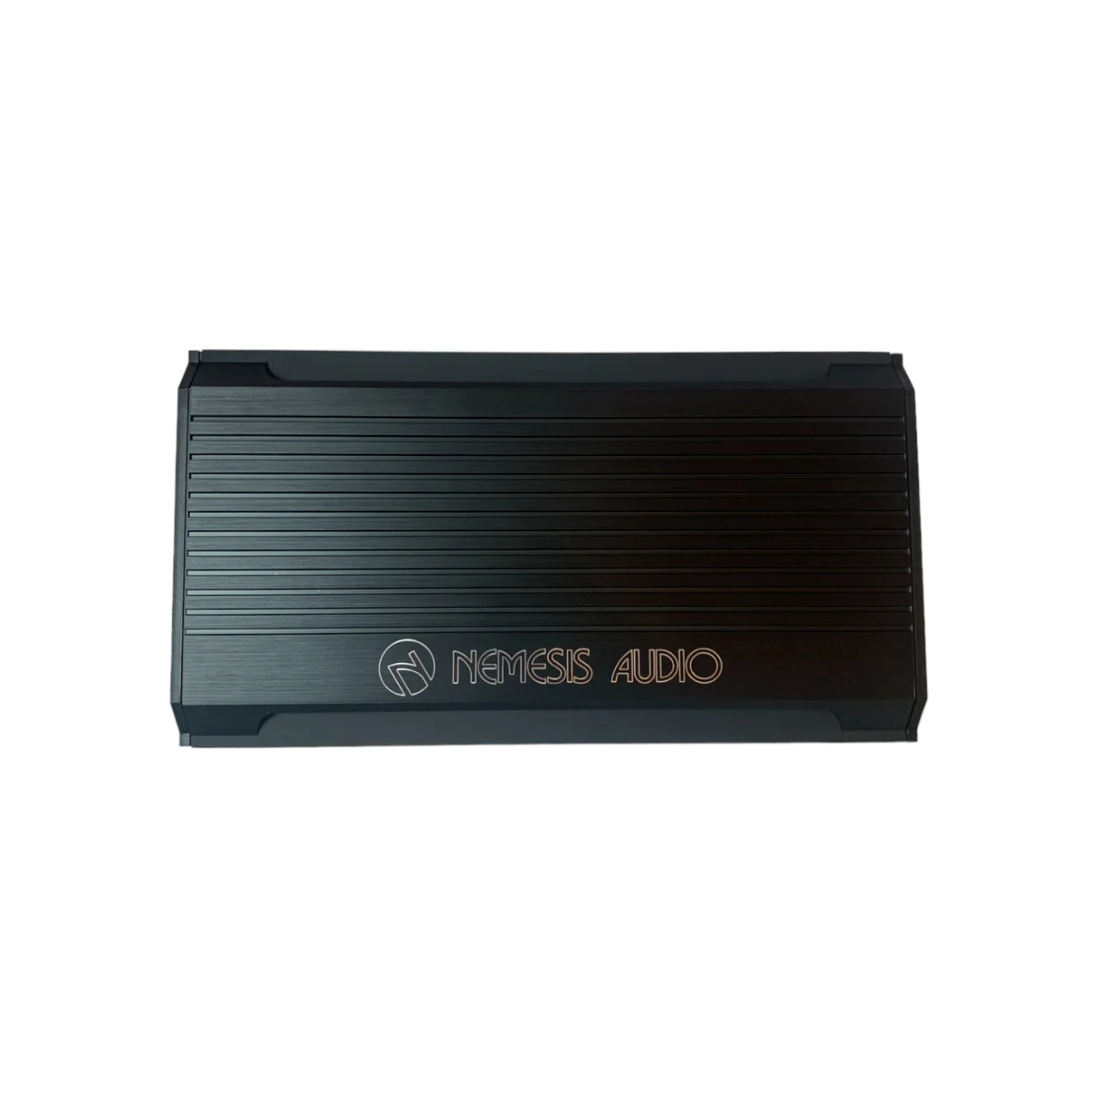 Nemesis Audio FIERCE-6KD 1-CH Monoblock 6000W Max Class-D Car Amplifier